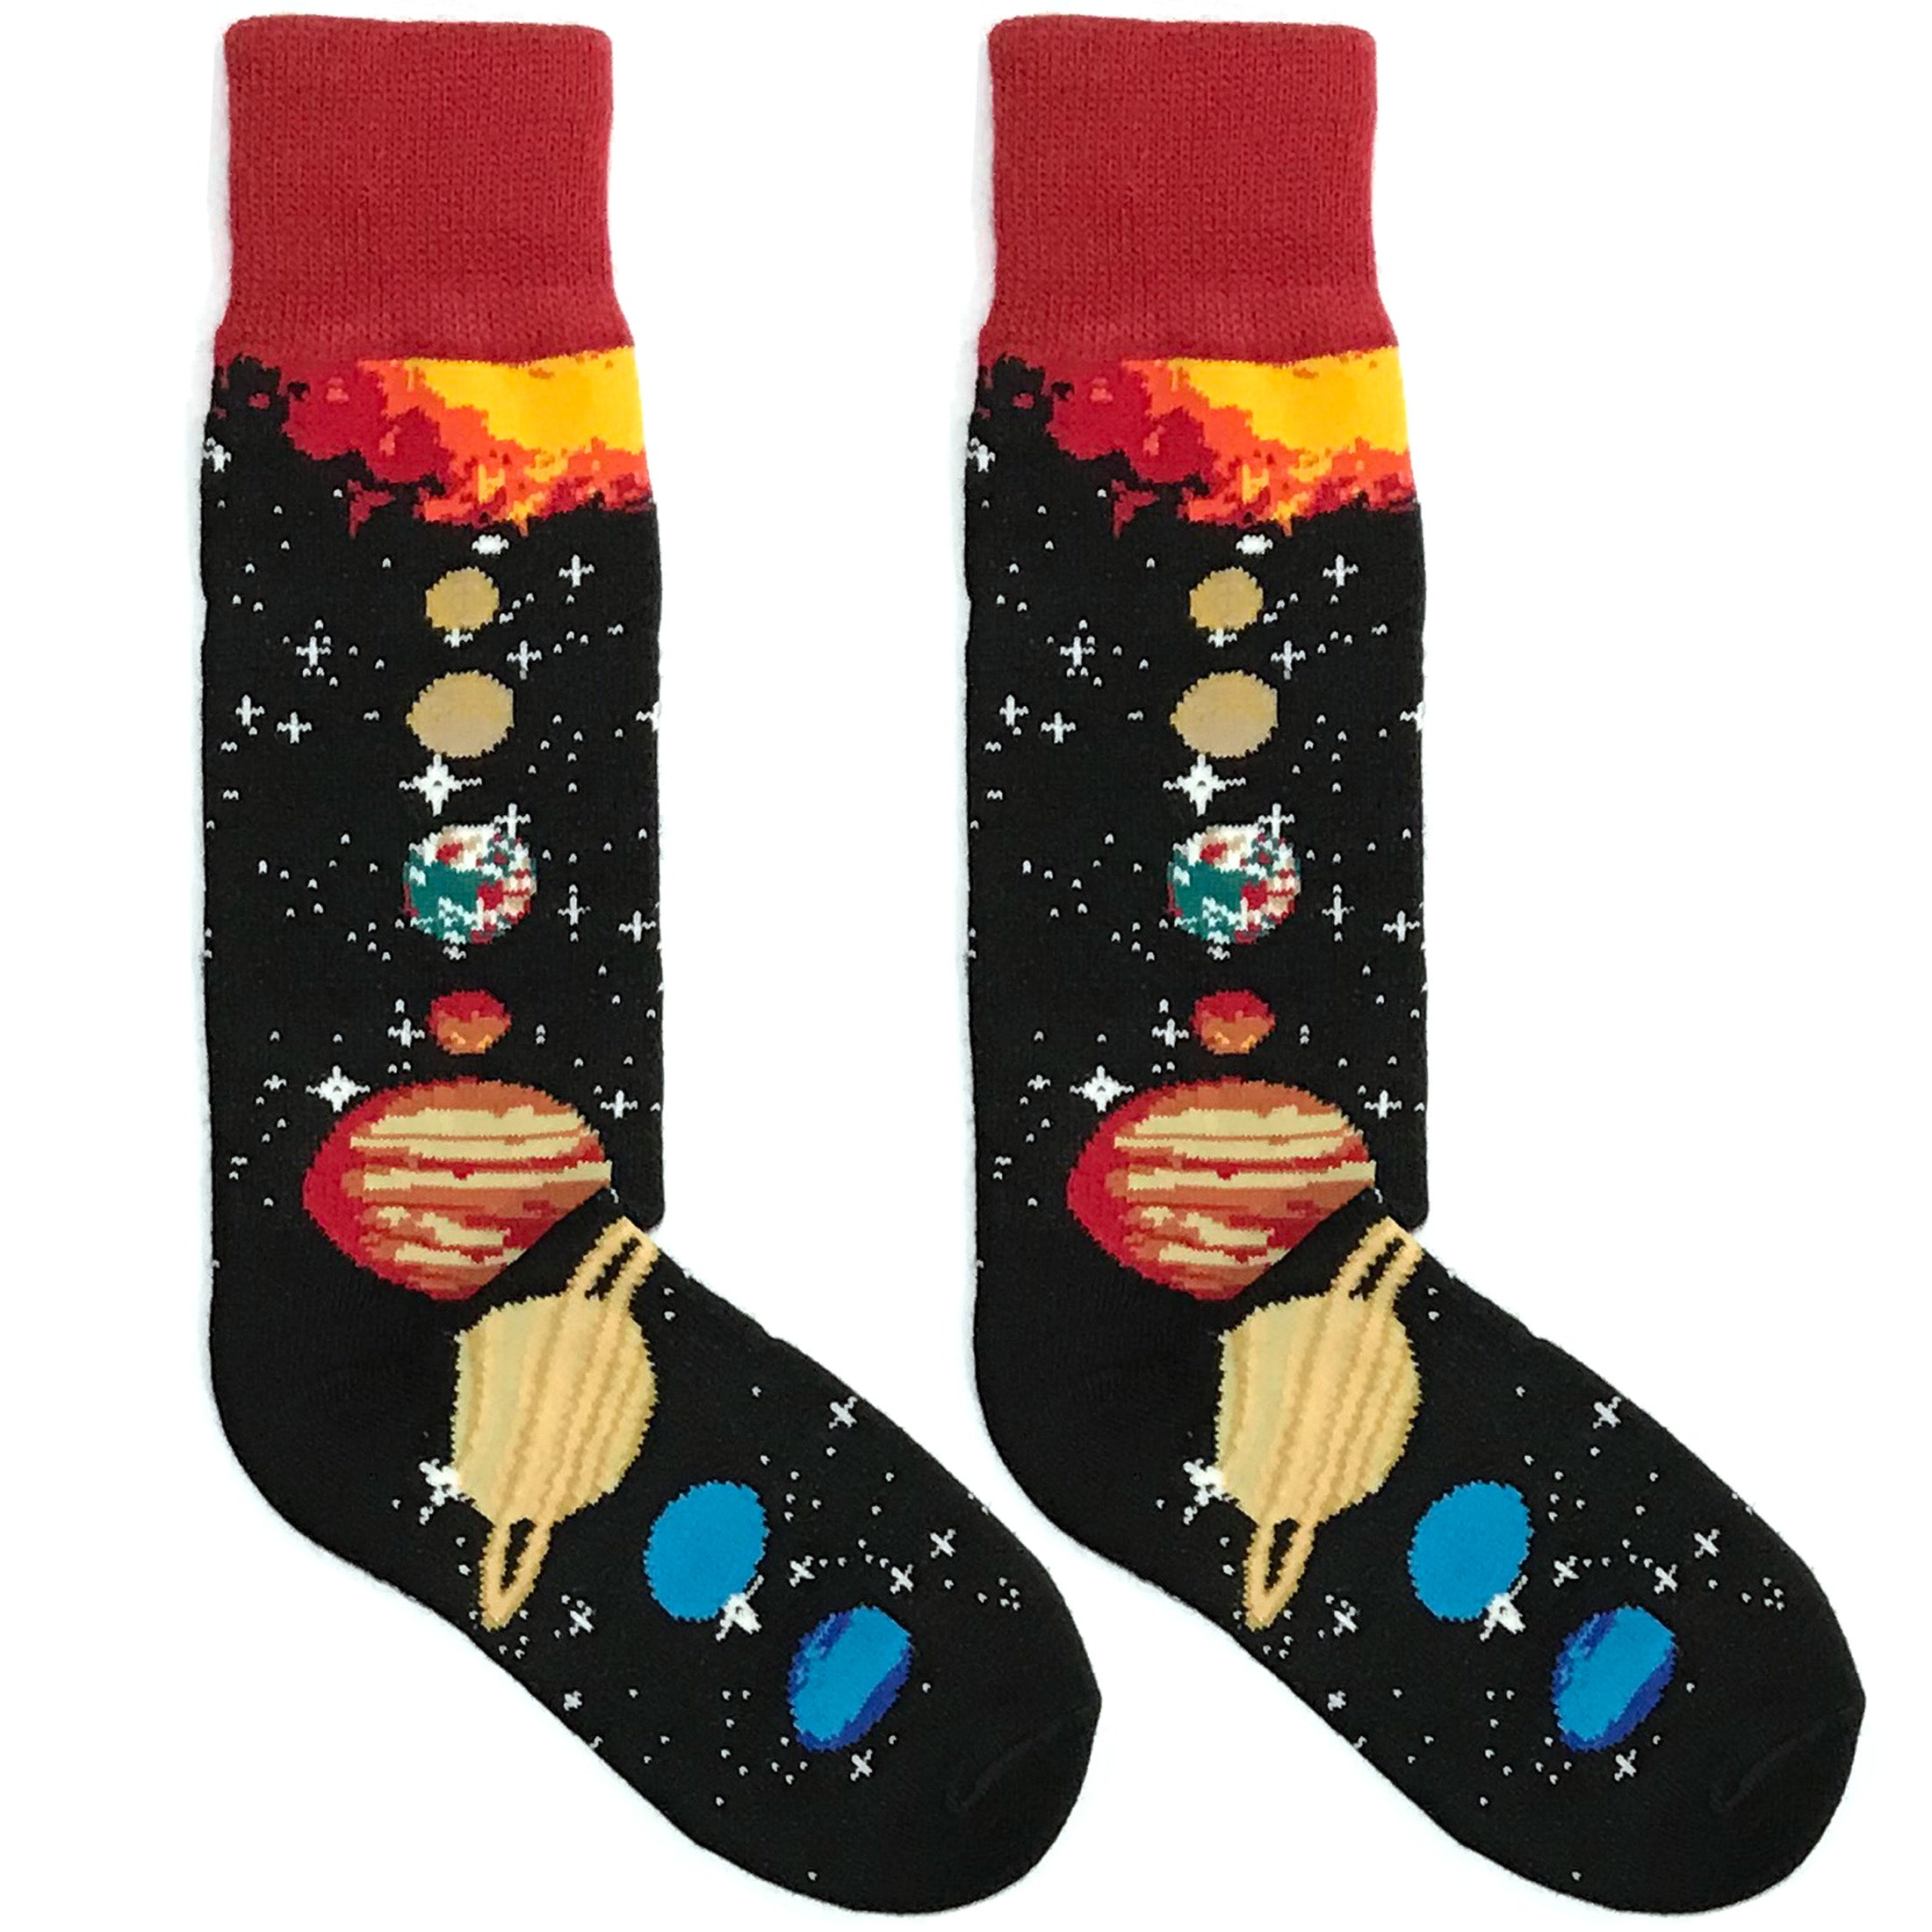 Flaming Universe Socks